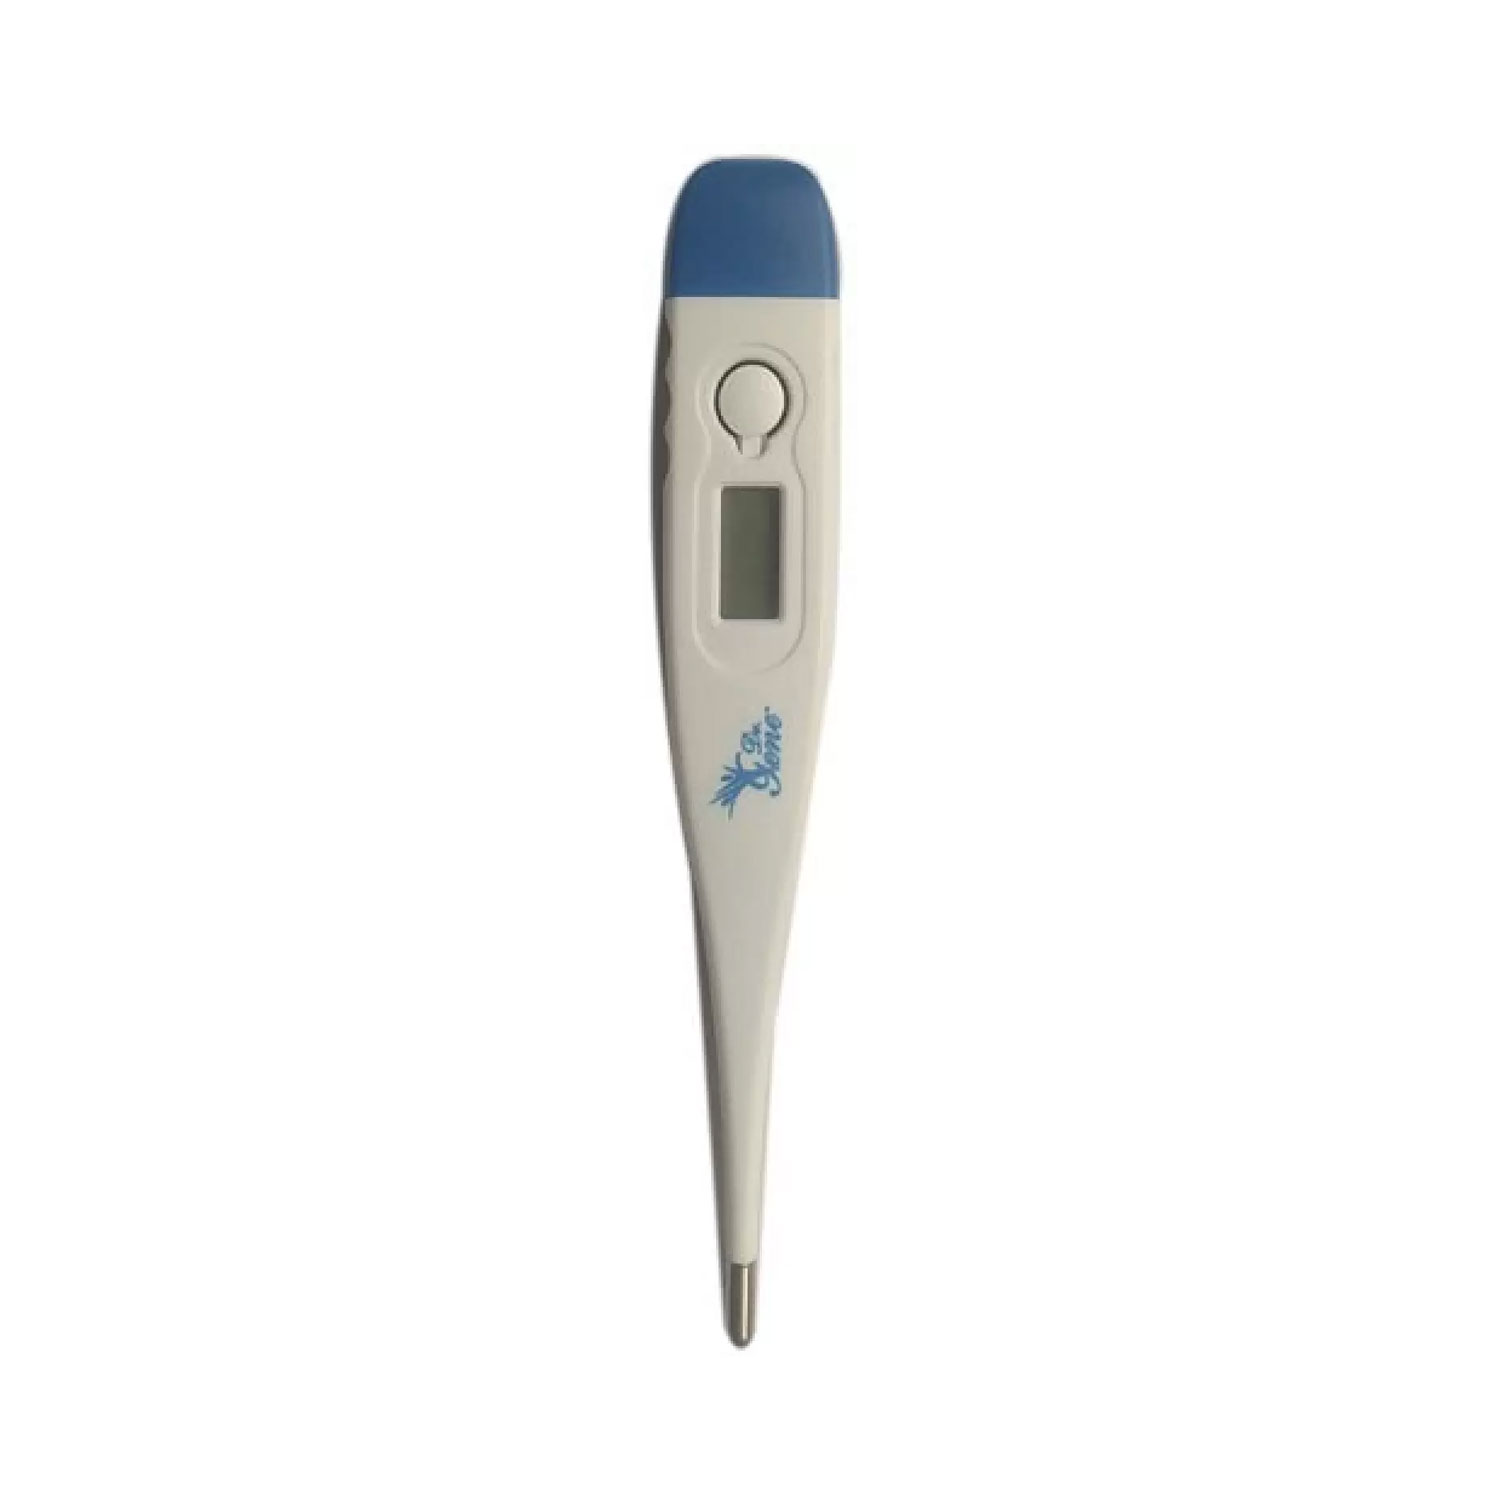 HealthEmate MT-101 AccuSure Thermometer (White) ₹149